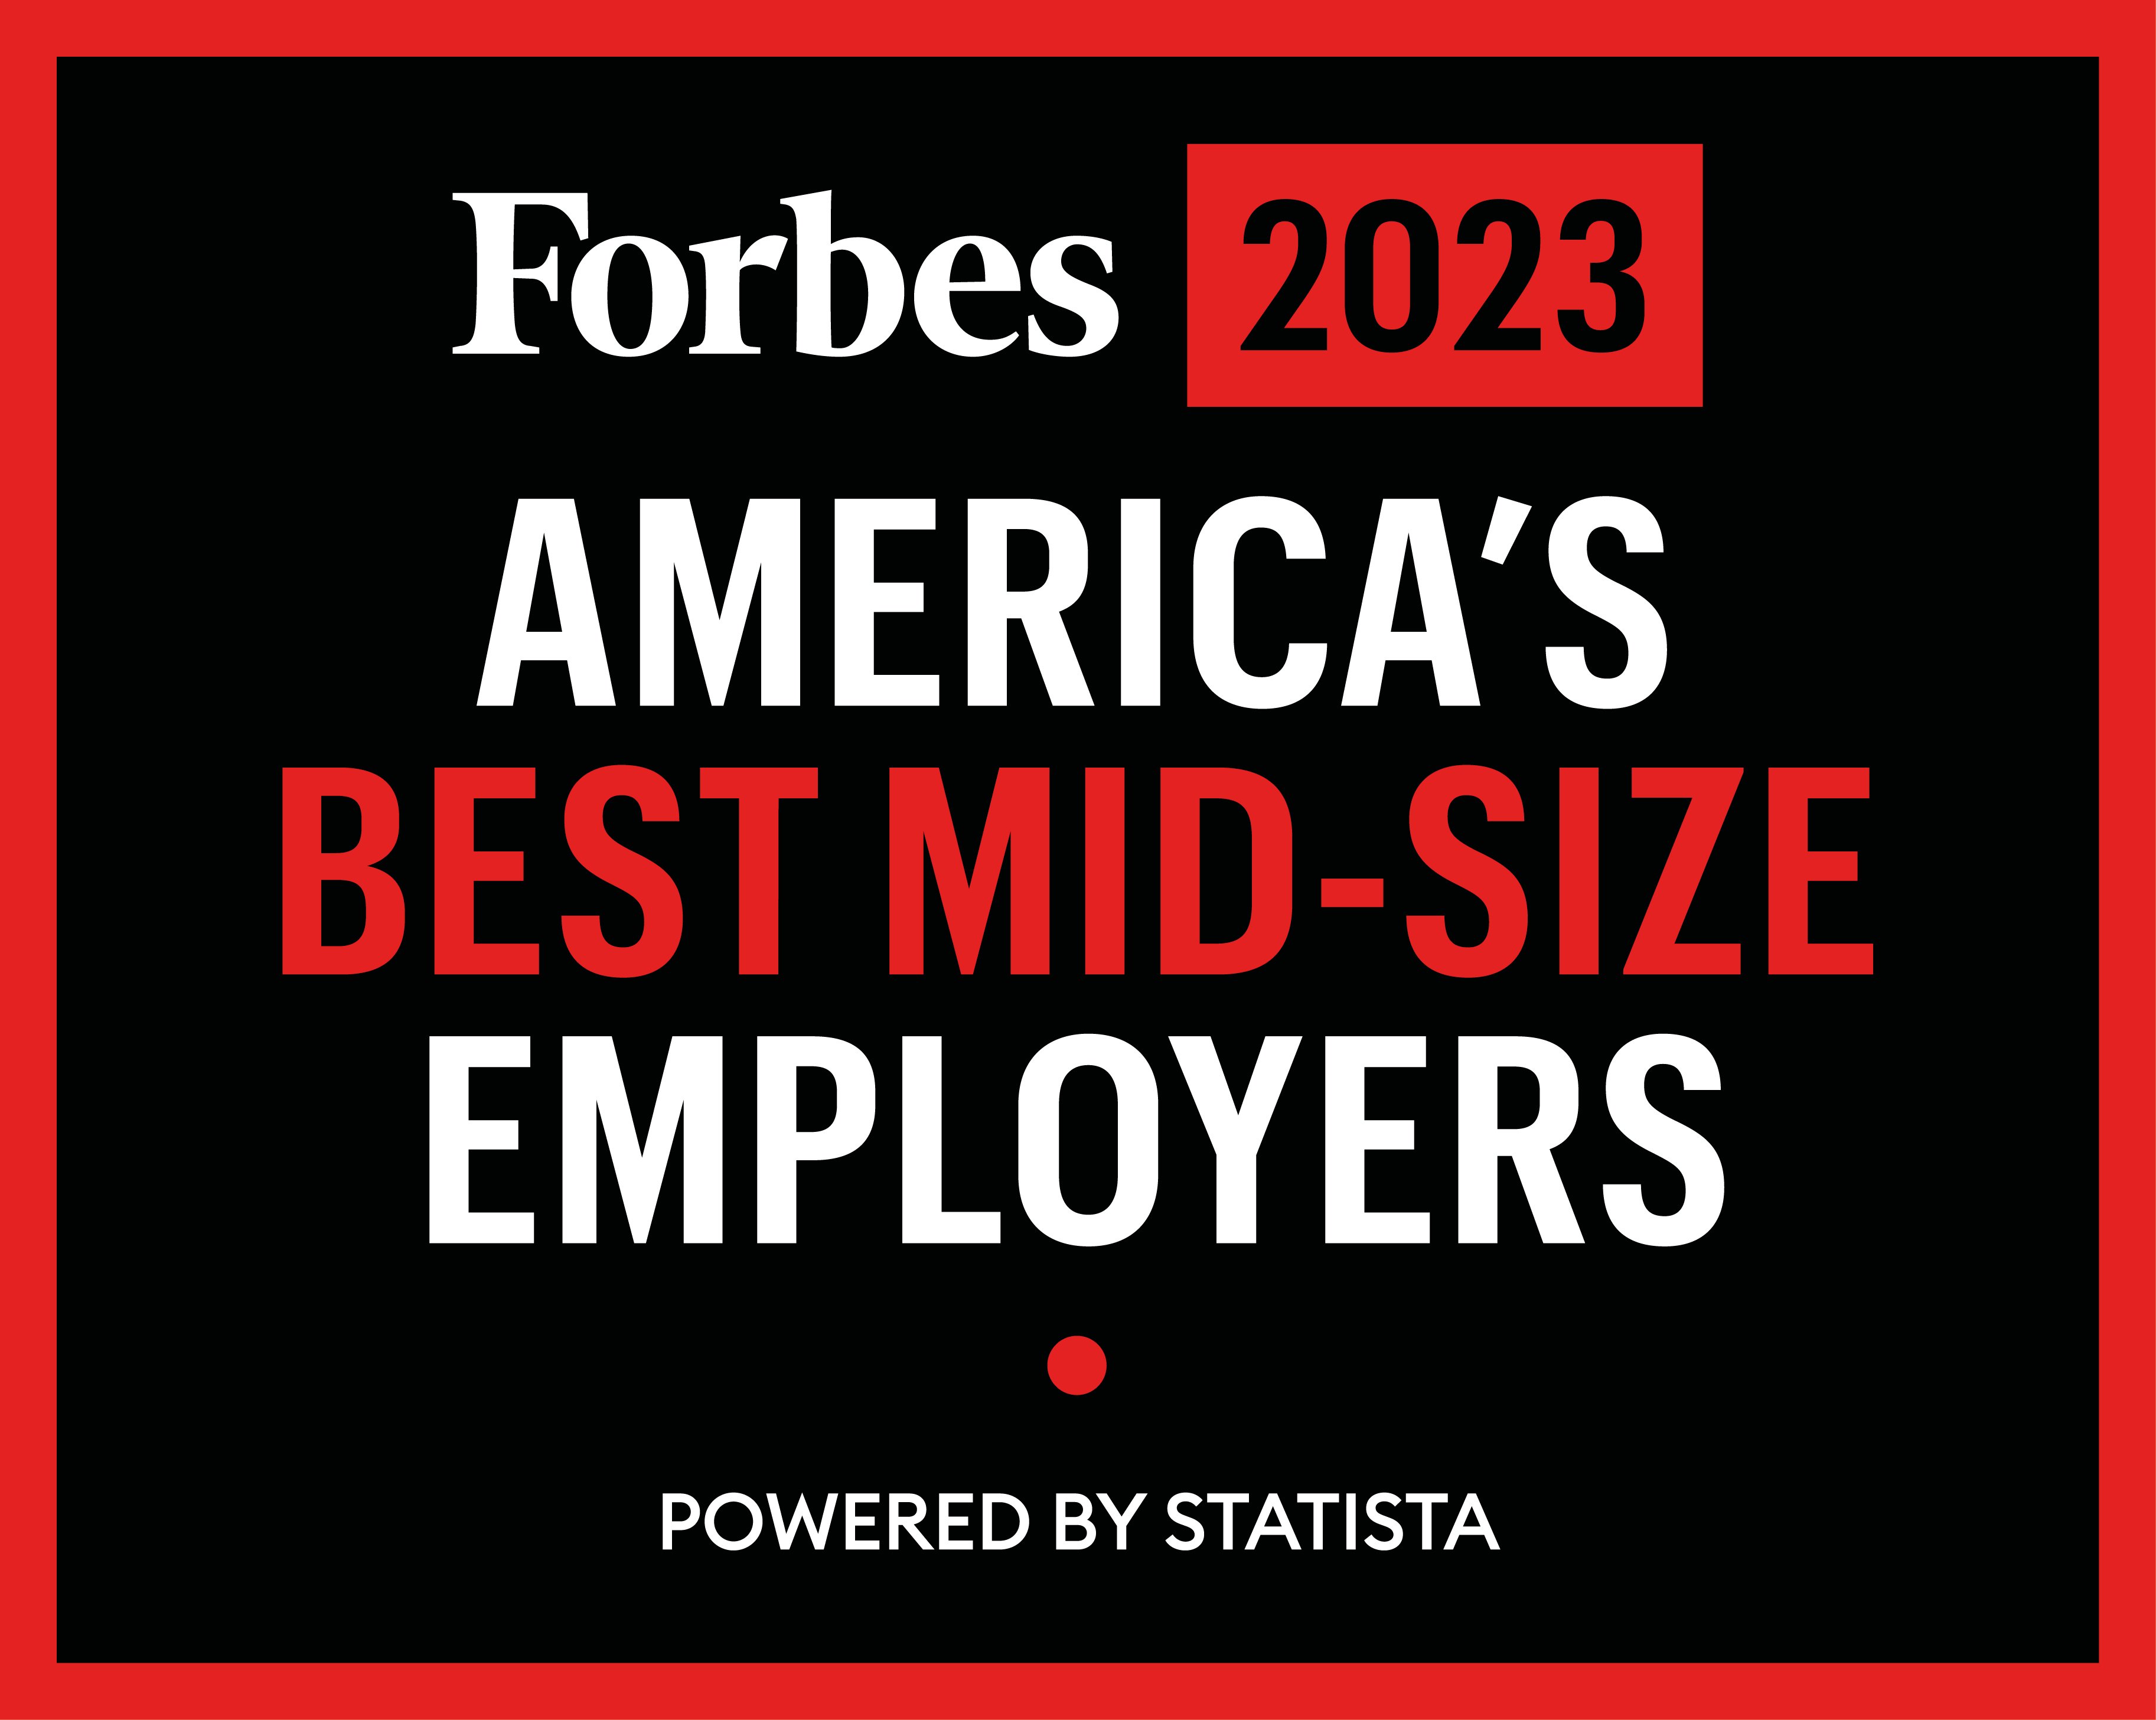 Forbes Award Logo